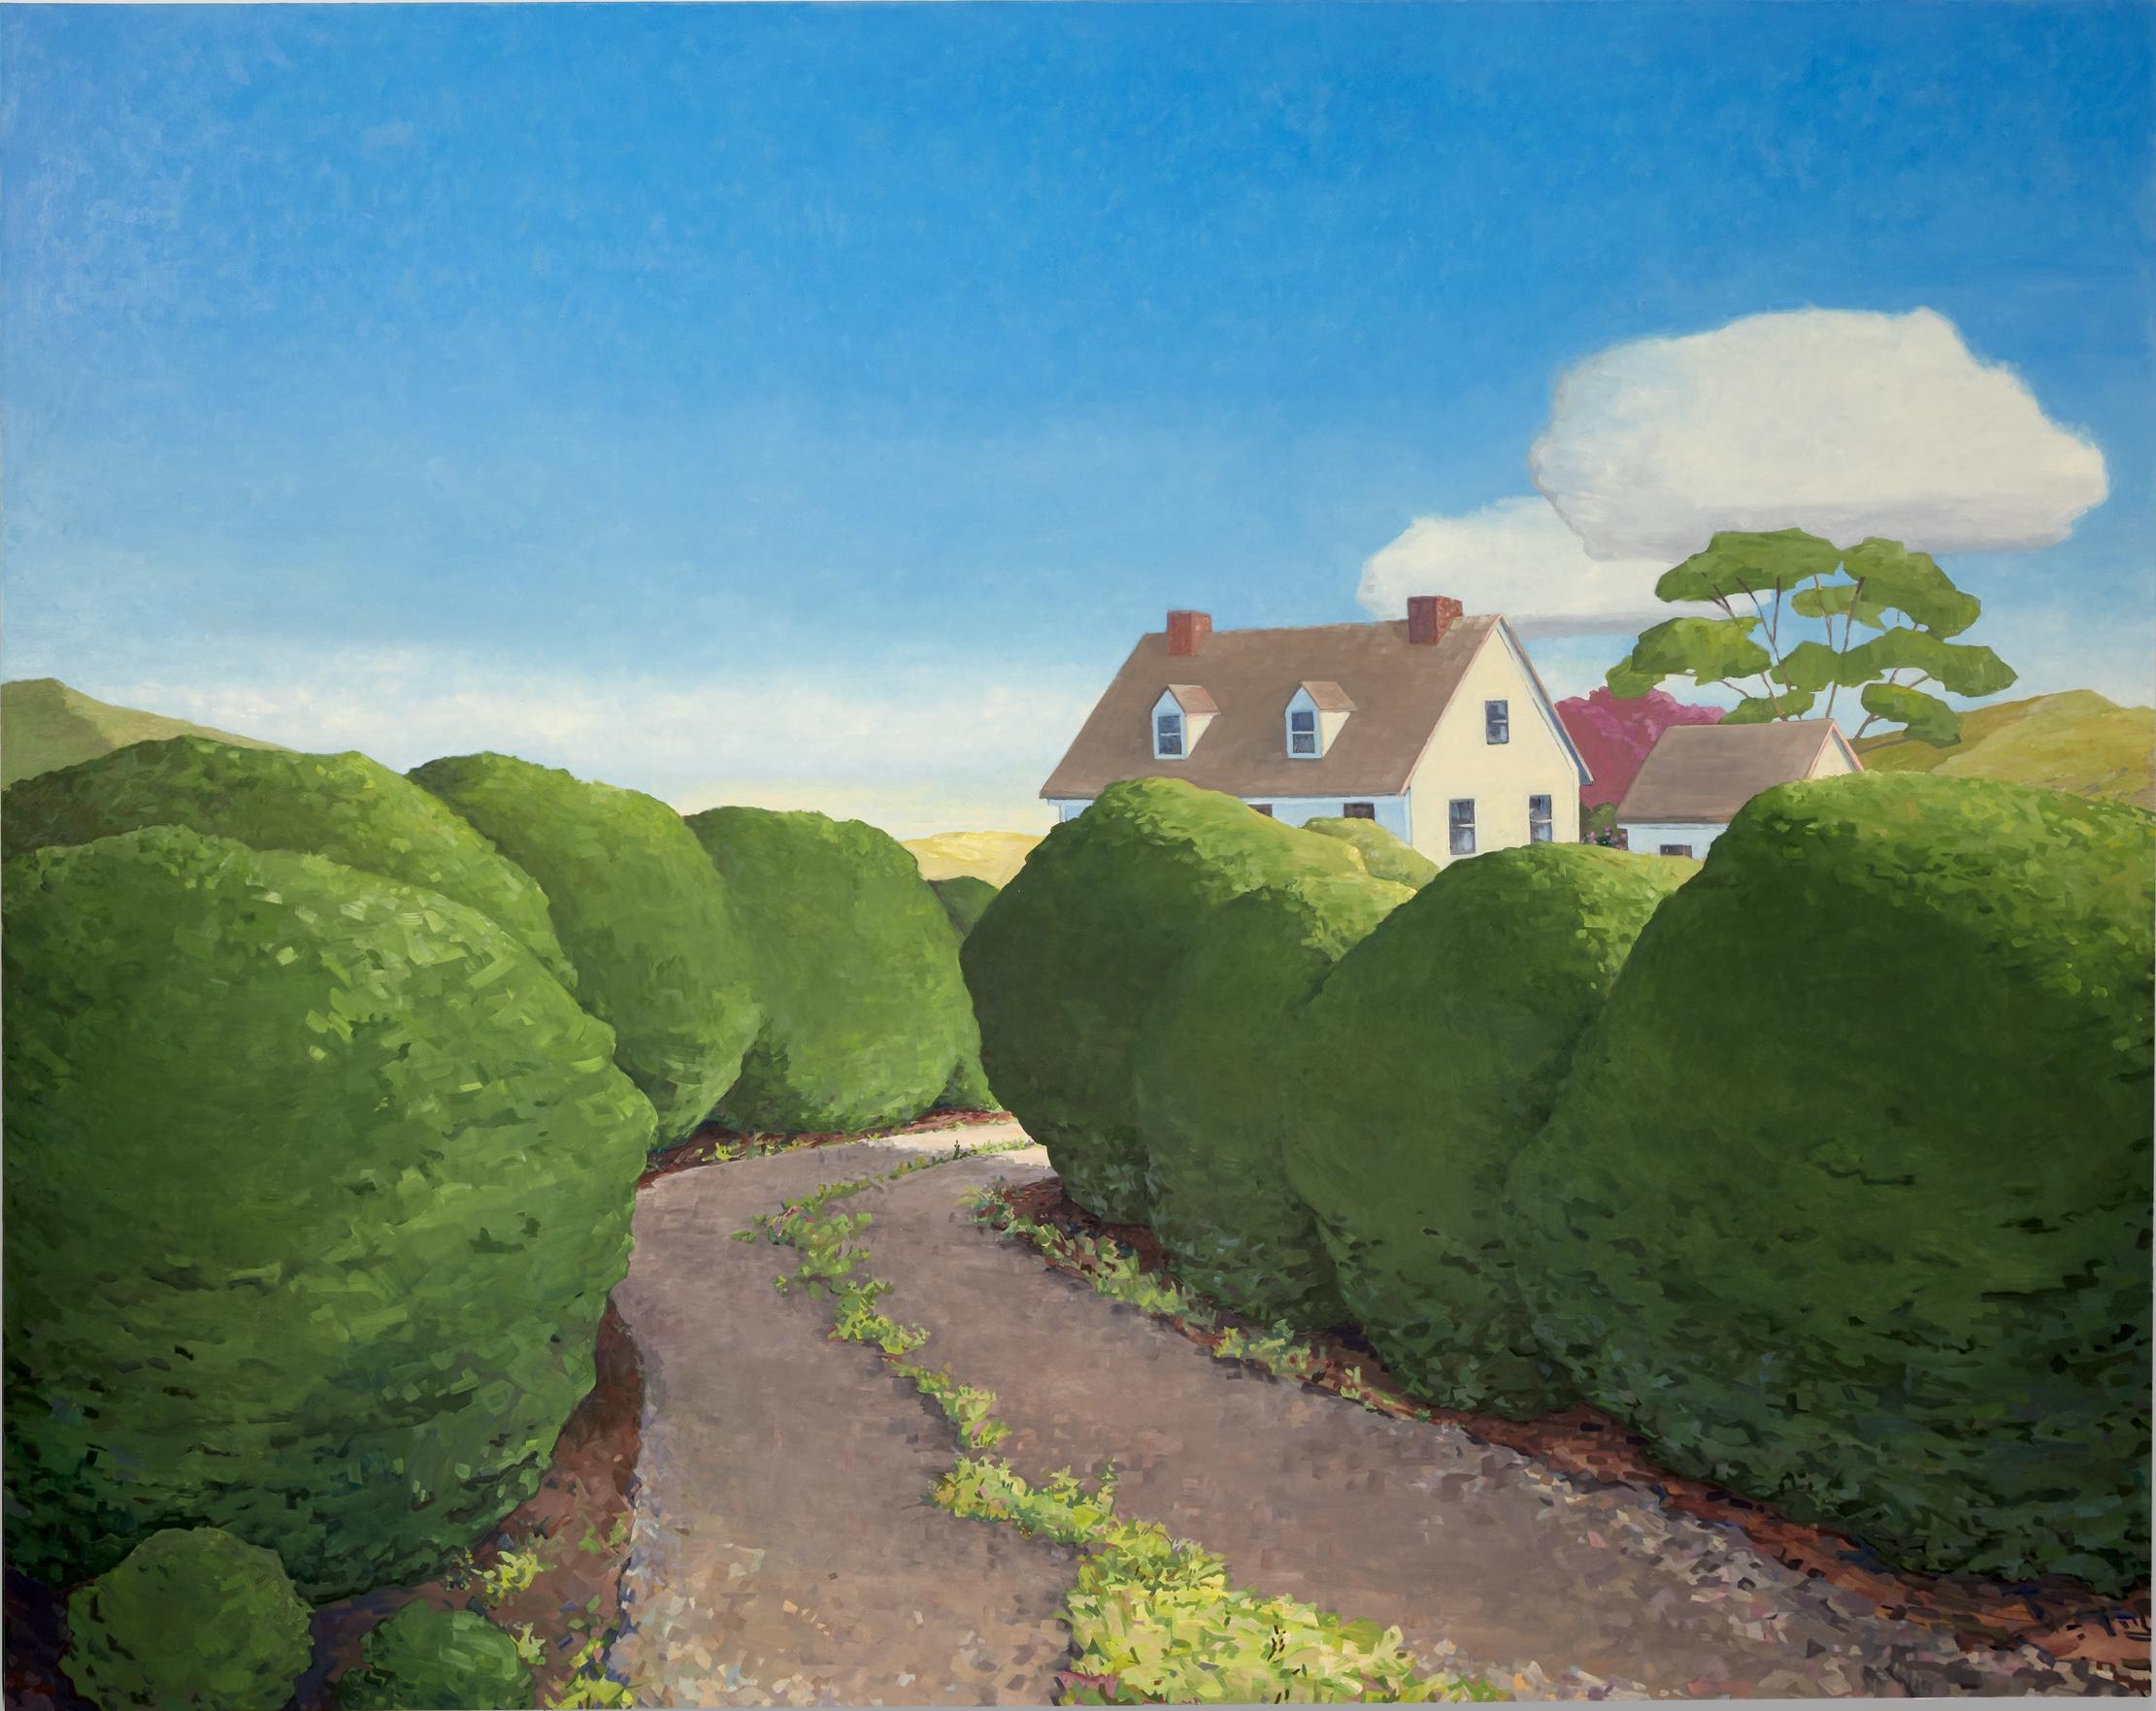 KK Kozik Landscape Painting - Invitation, White House Roof, Blue Sky, Clouds, Green Hedges, Pathway